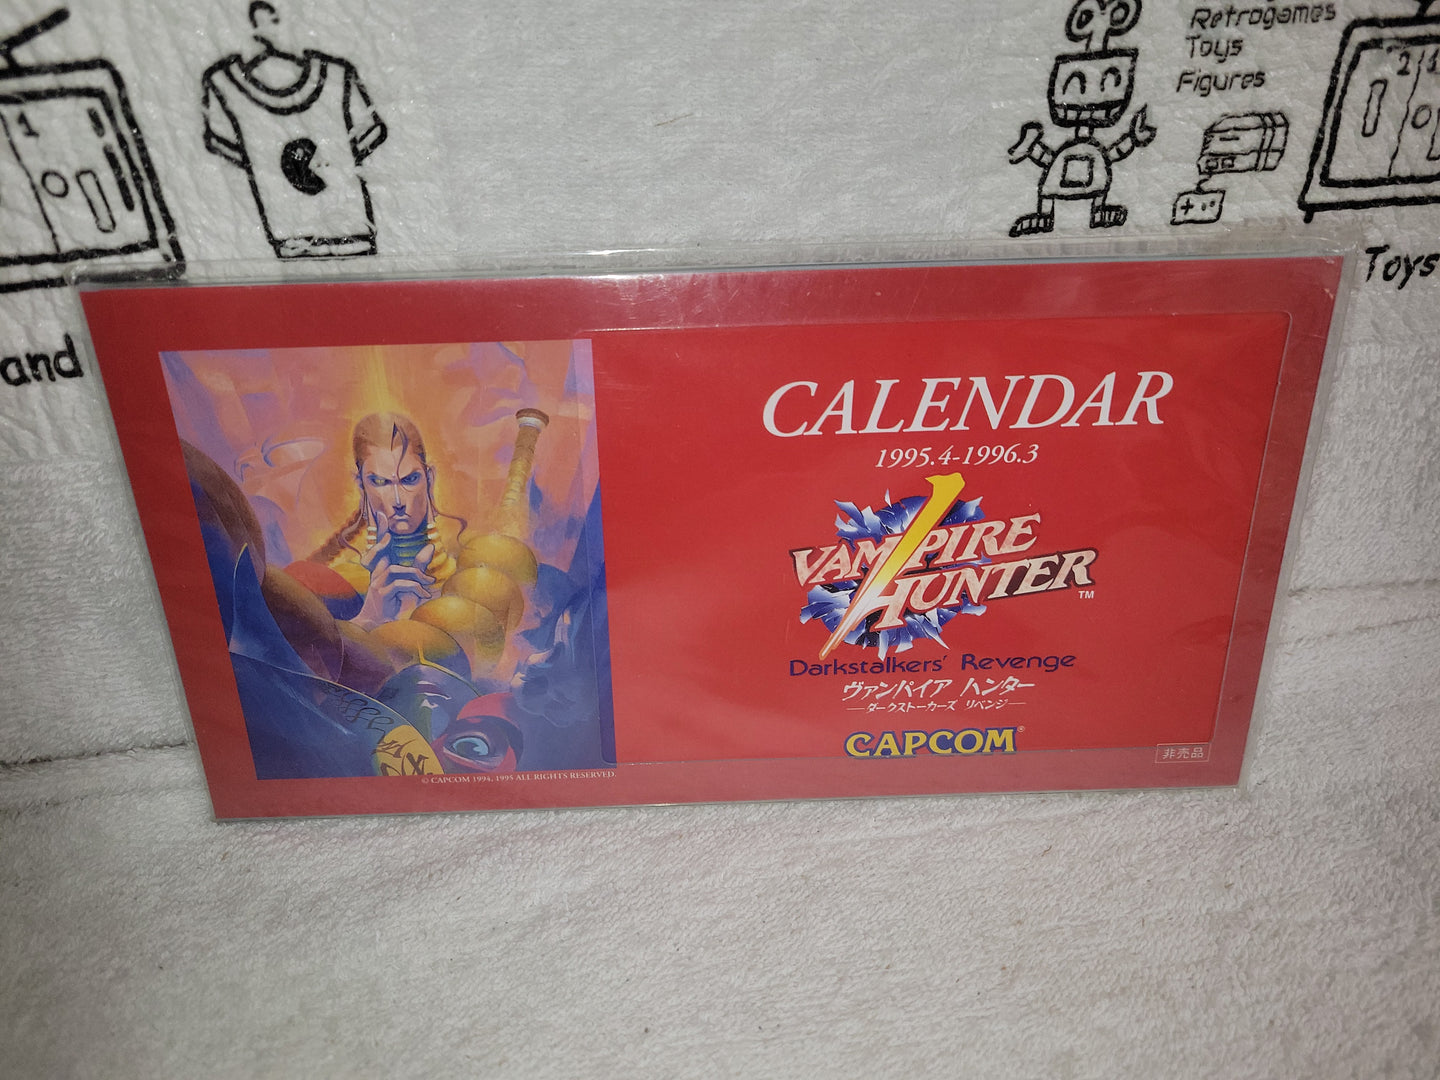 Vampire Hunter 1995/96 calendar  - toy action figure model